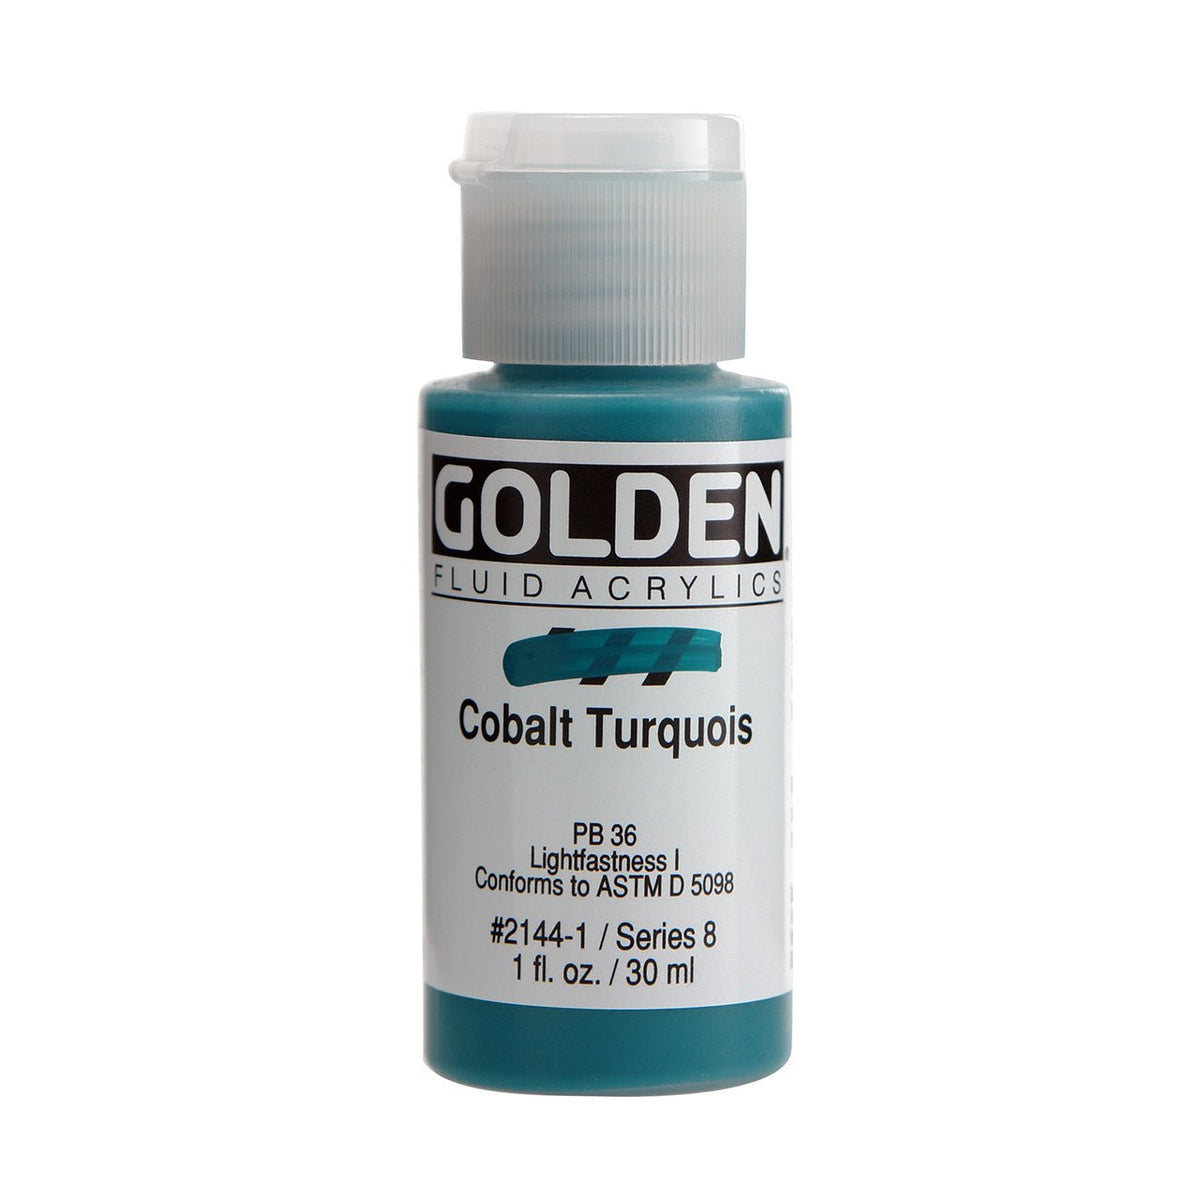 Golden Fluid Acrylic Cobalt Turquoise 1 oz - merriartist.com